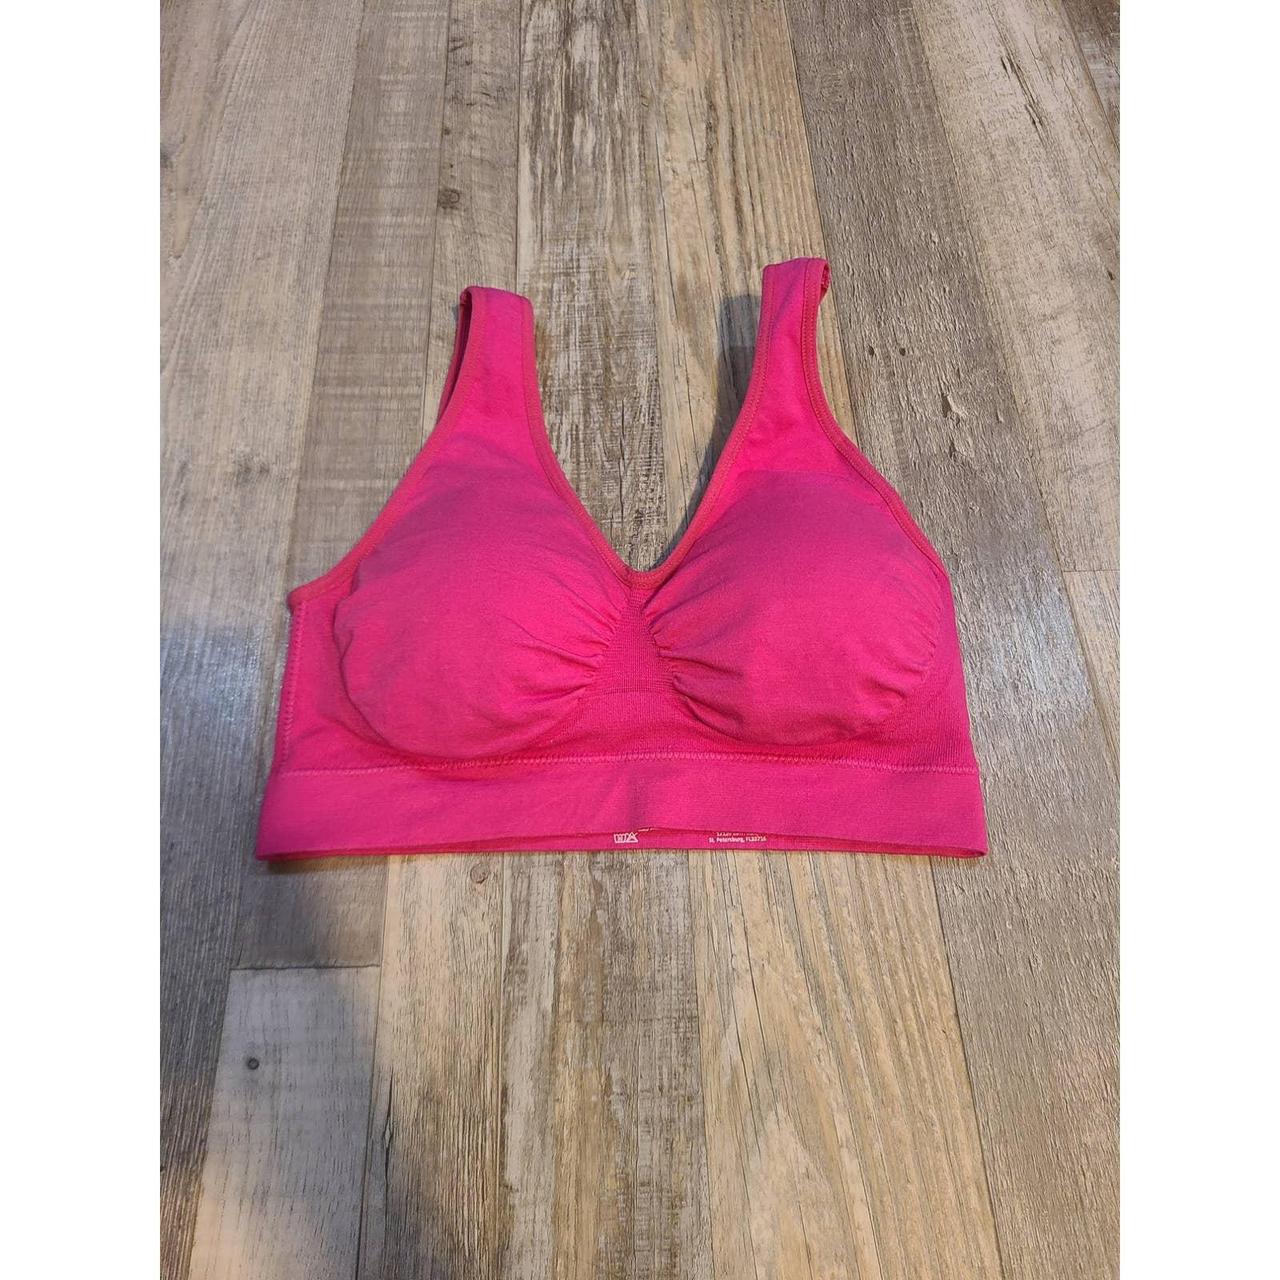 Rhonda shear xl womens pink sports bra removable - Depop